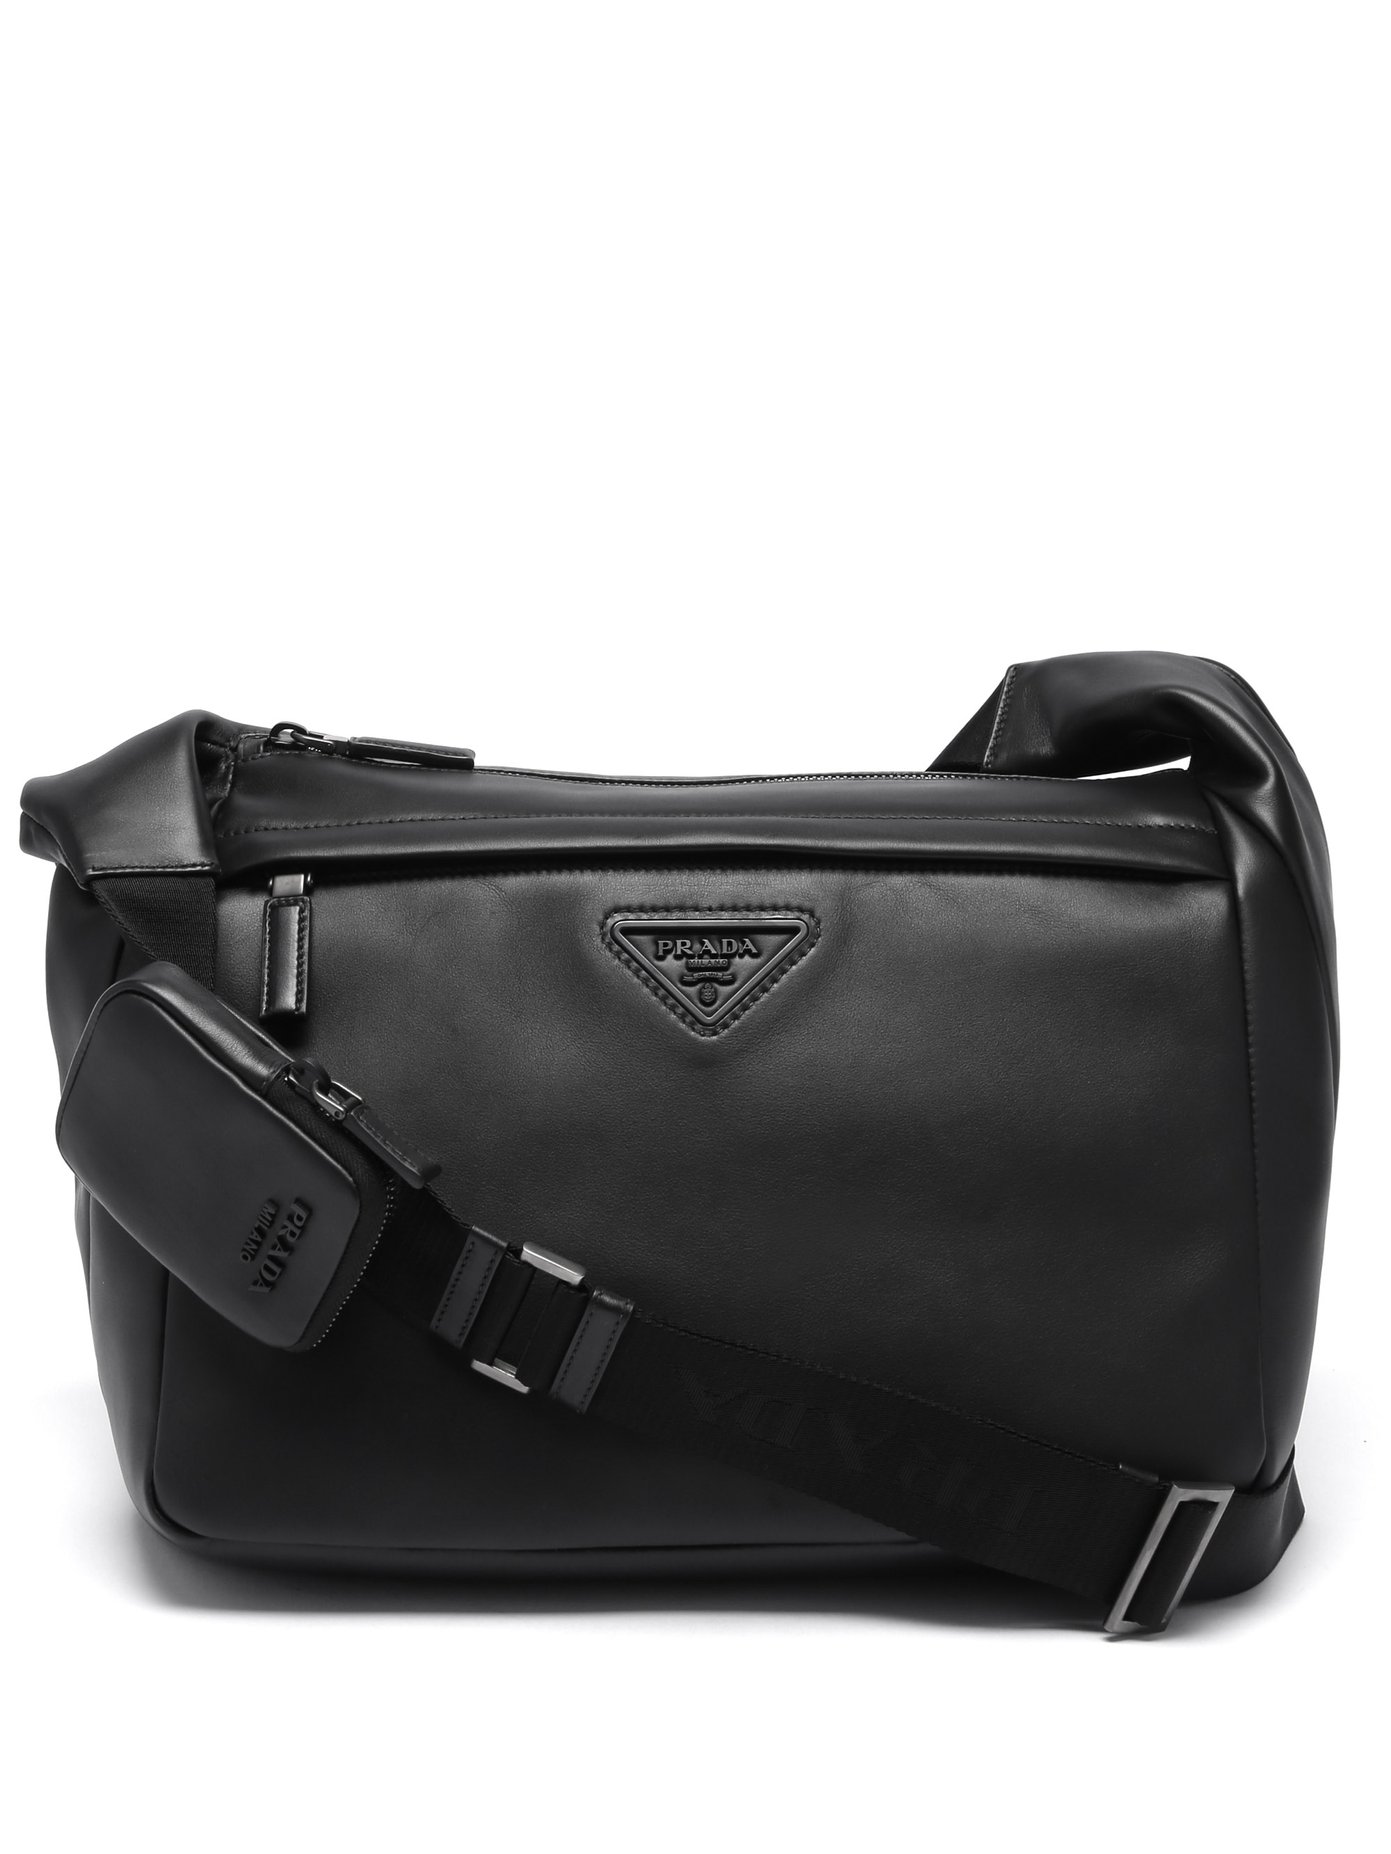 prada leather messenger bag